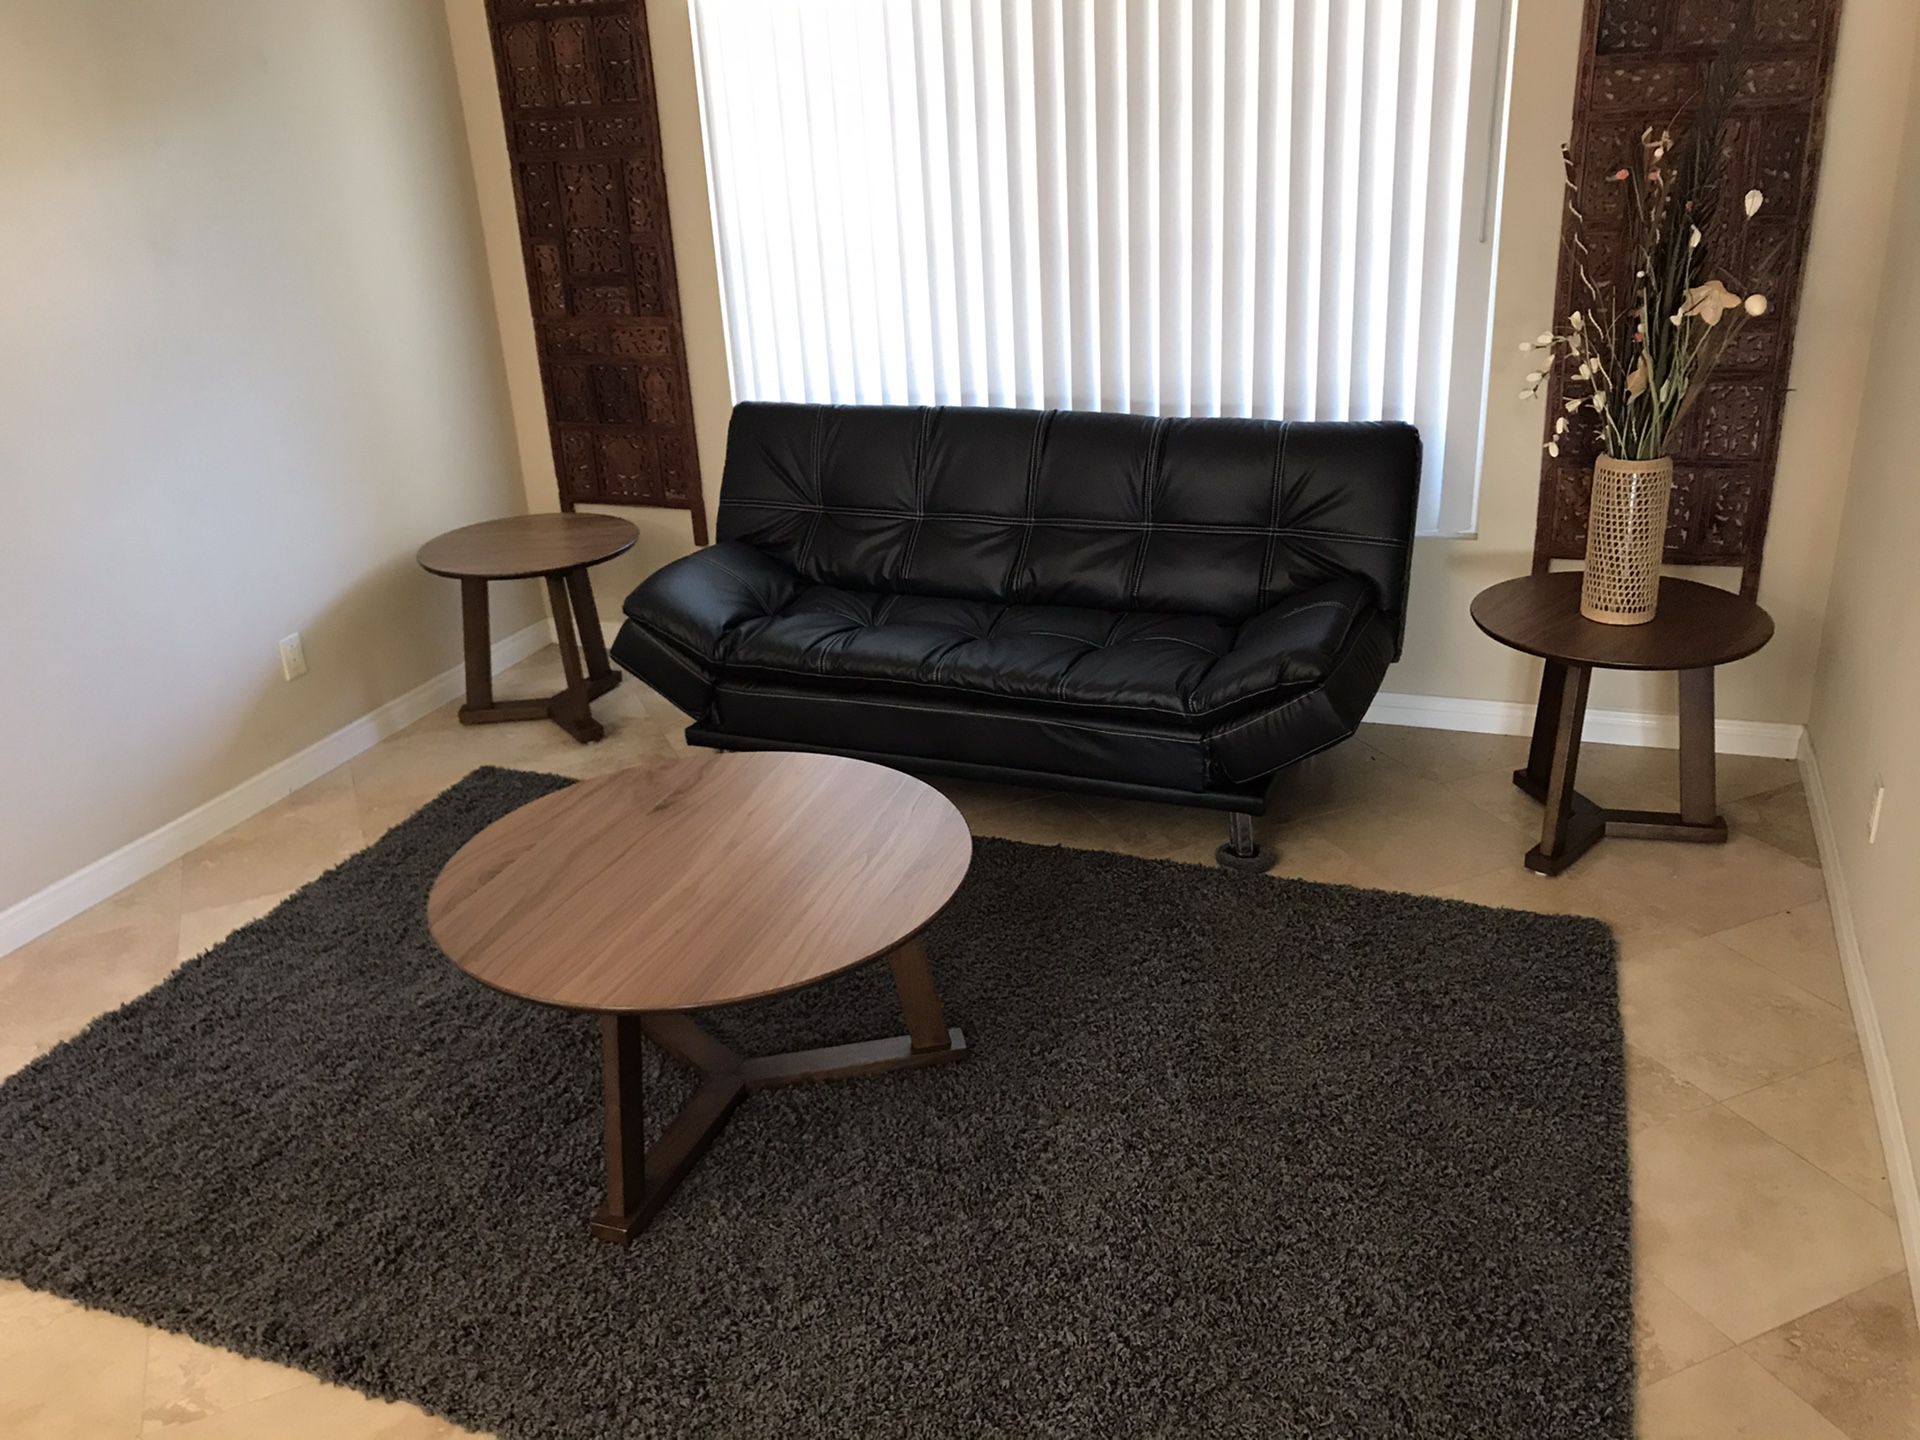 Beautiful brand new 4pc livingroom set